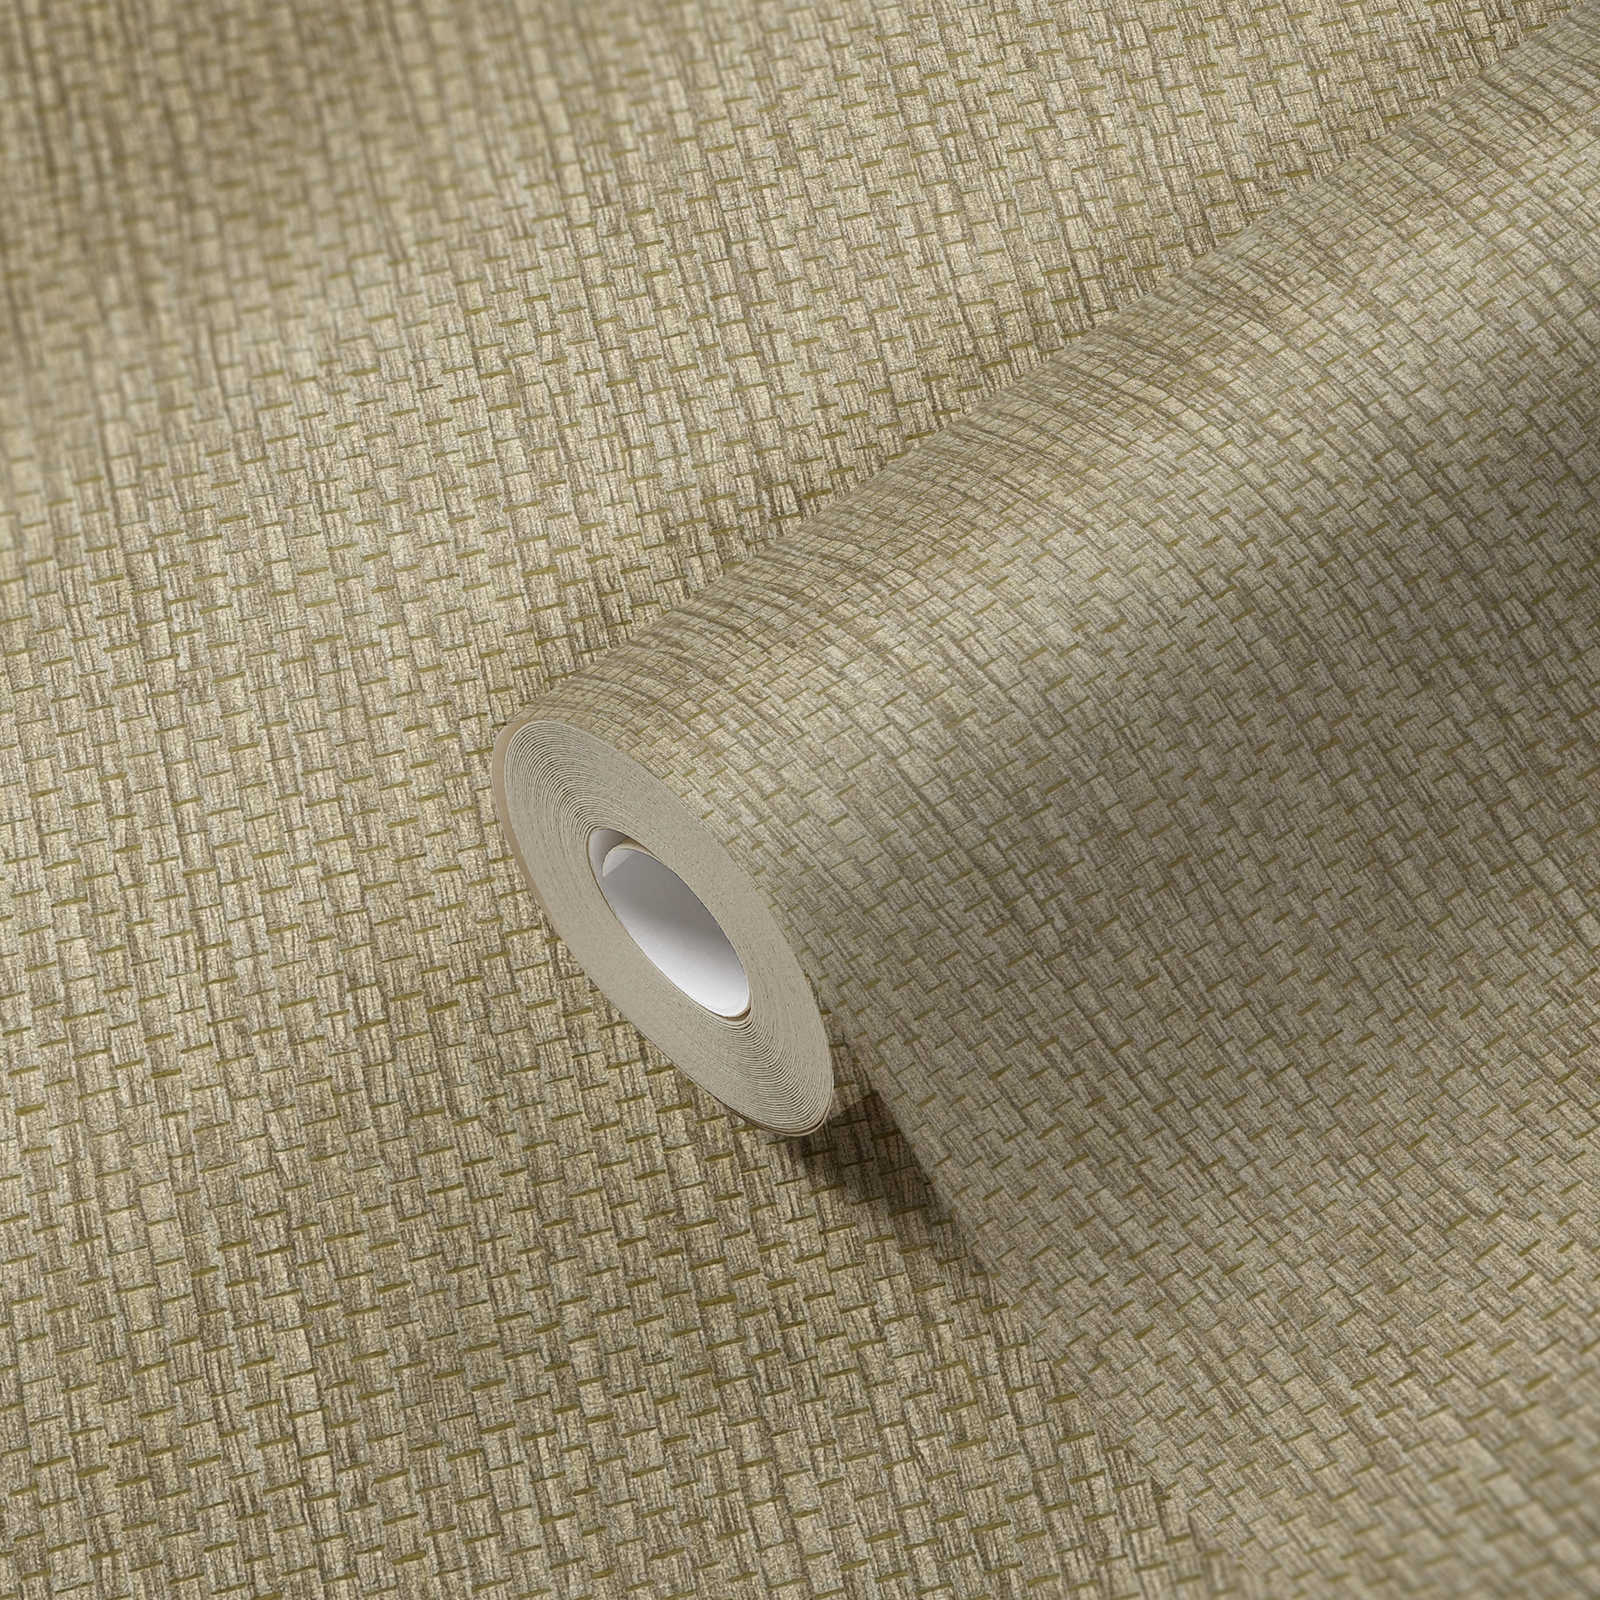             Nature wallpaper reed mat design - beige, grey
        